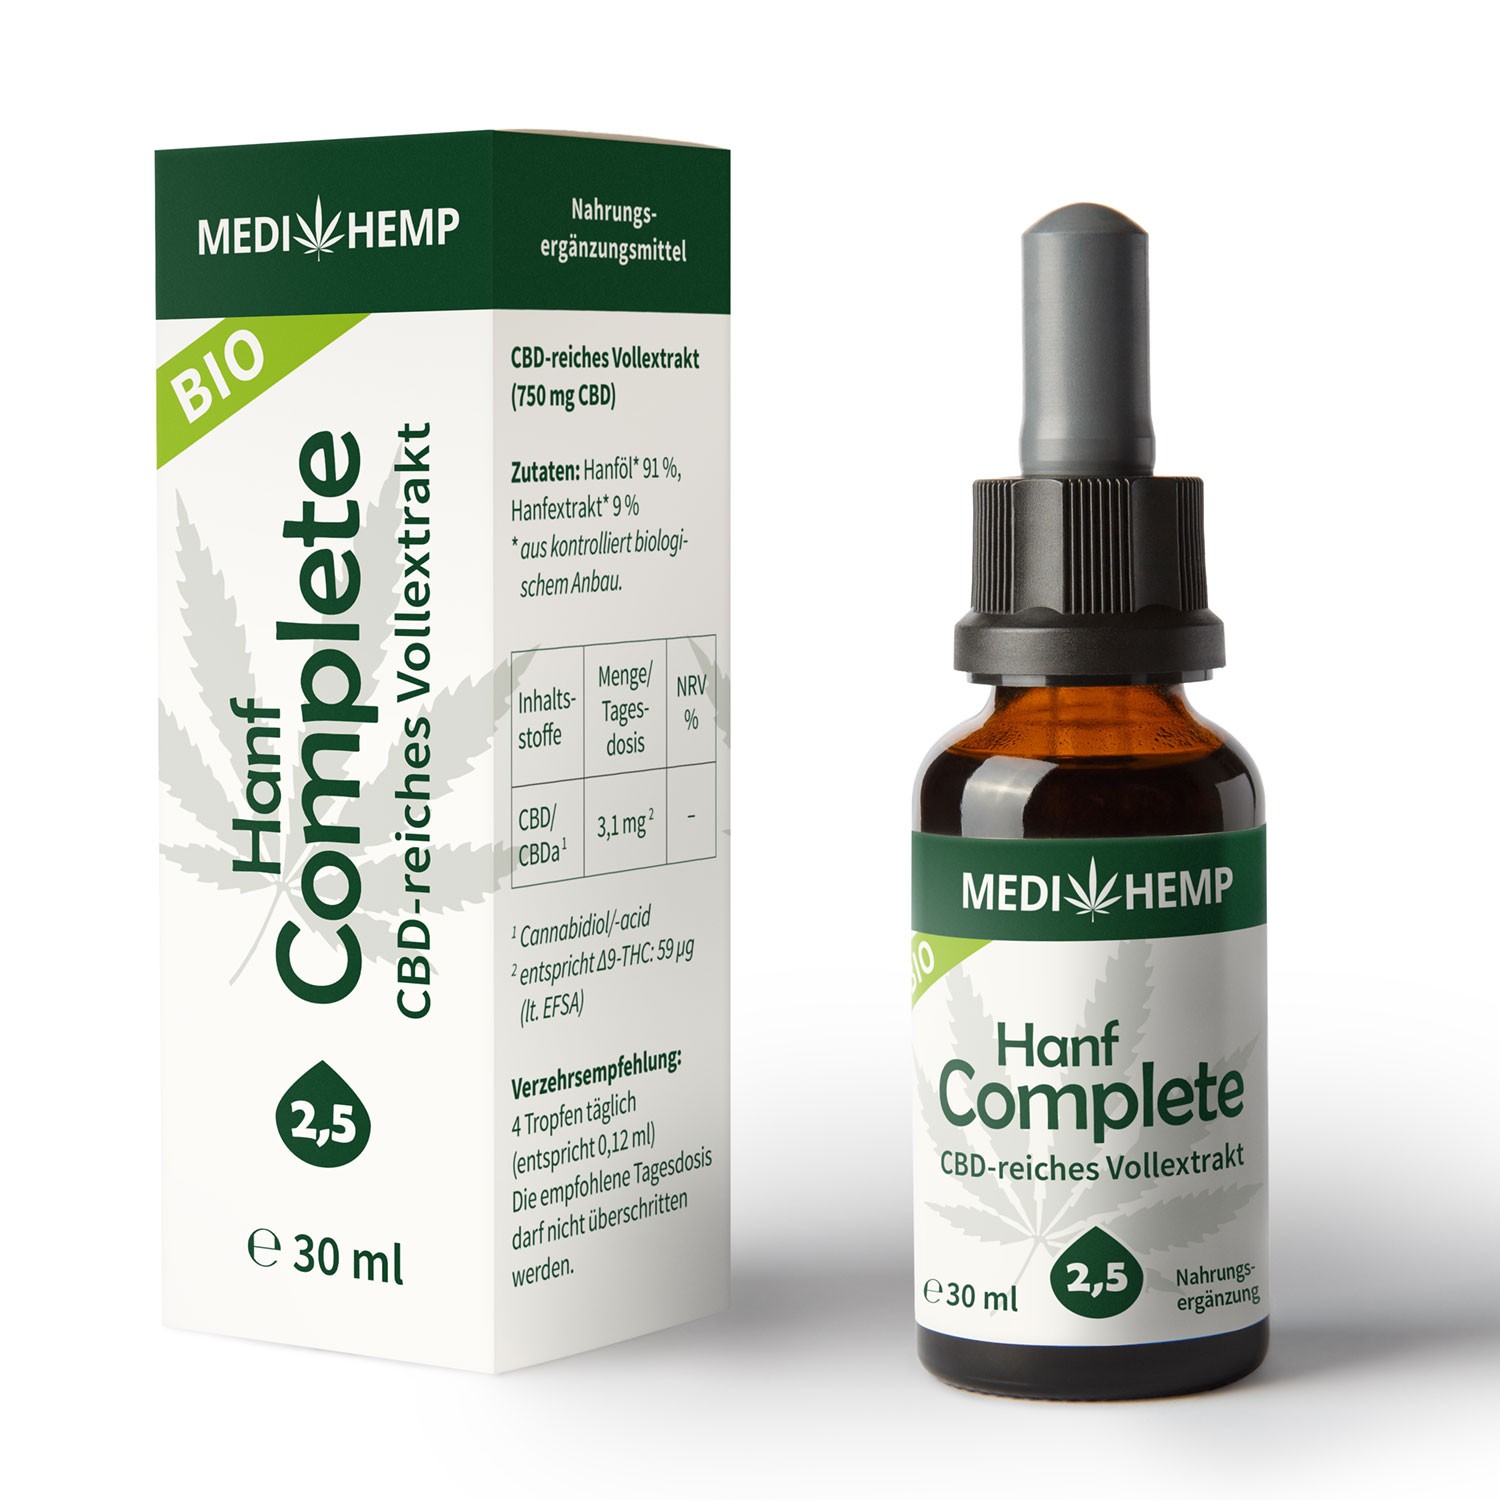 Medihemp Bio Hanf Complete Öl - 2,5 % - 30 ml - 750 mg CBD Aromaöl